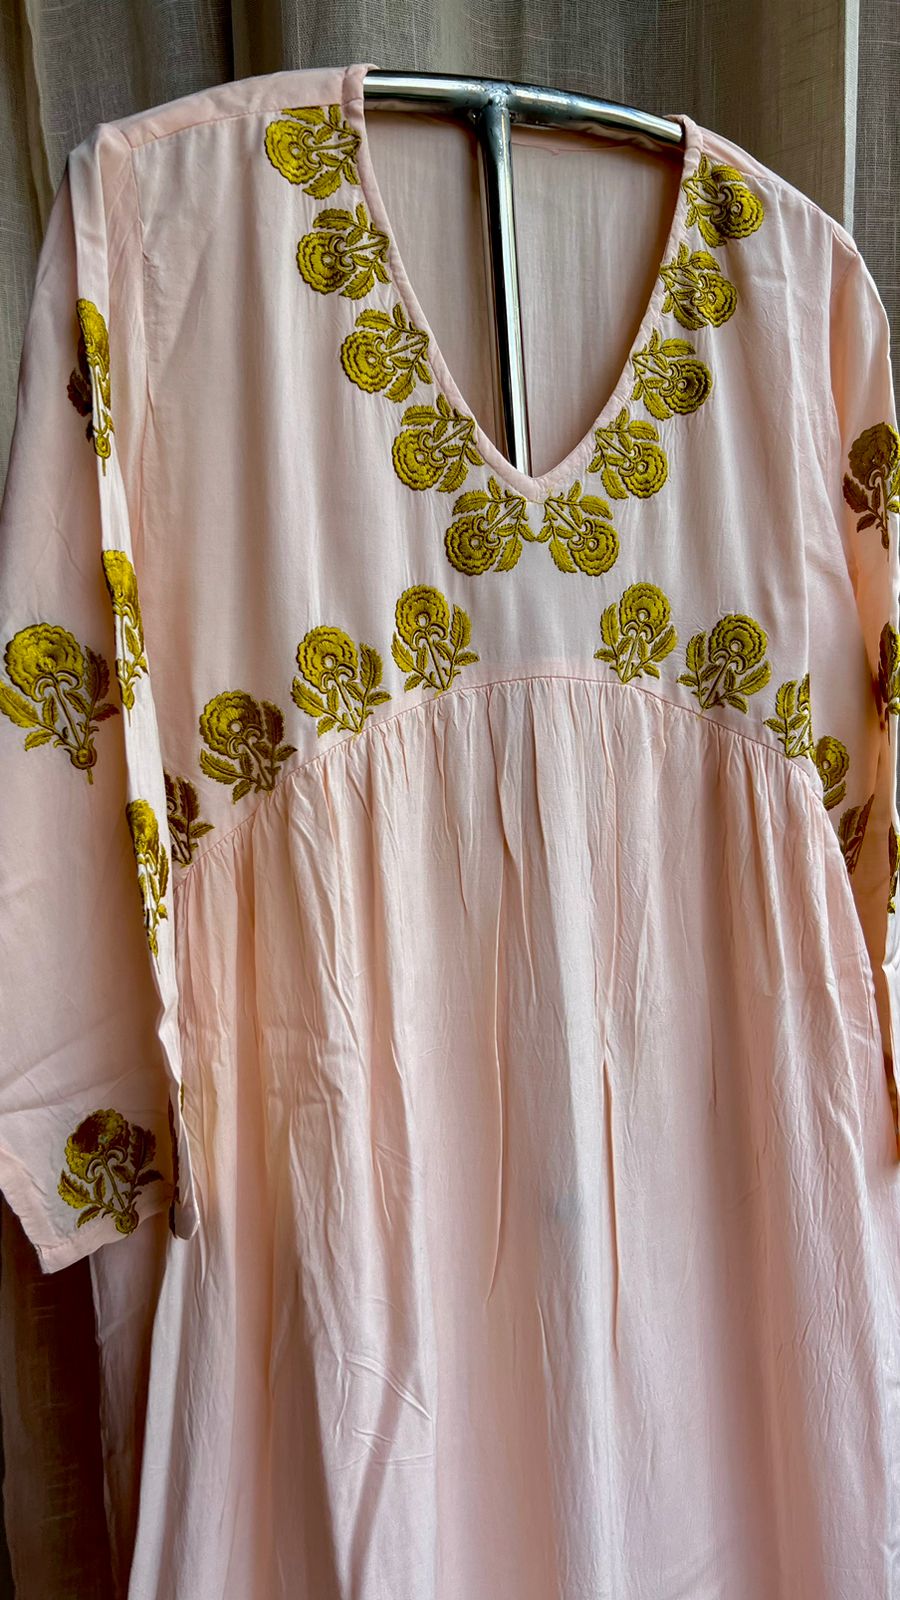 Peach cotton embroidery kurti top